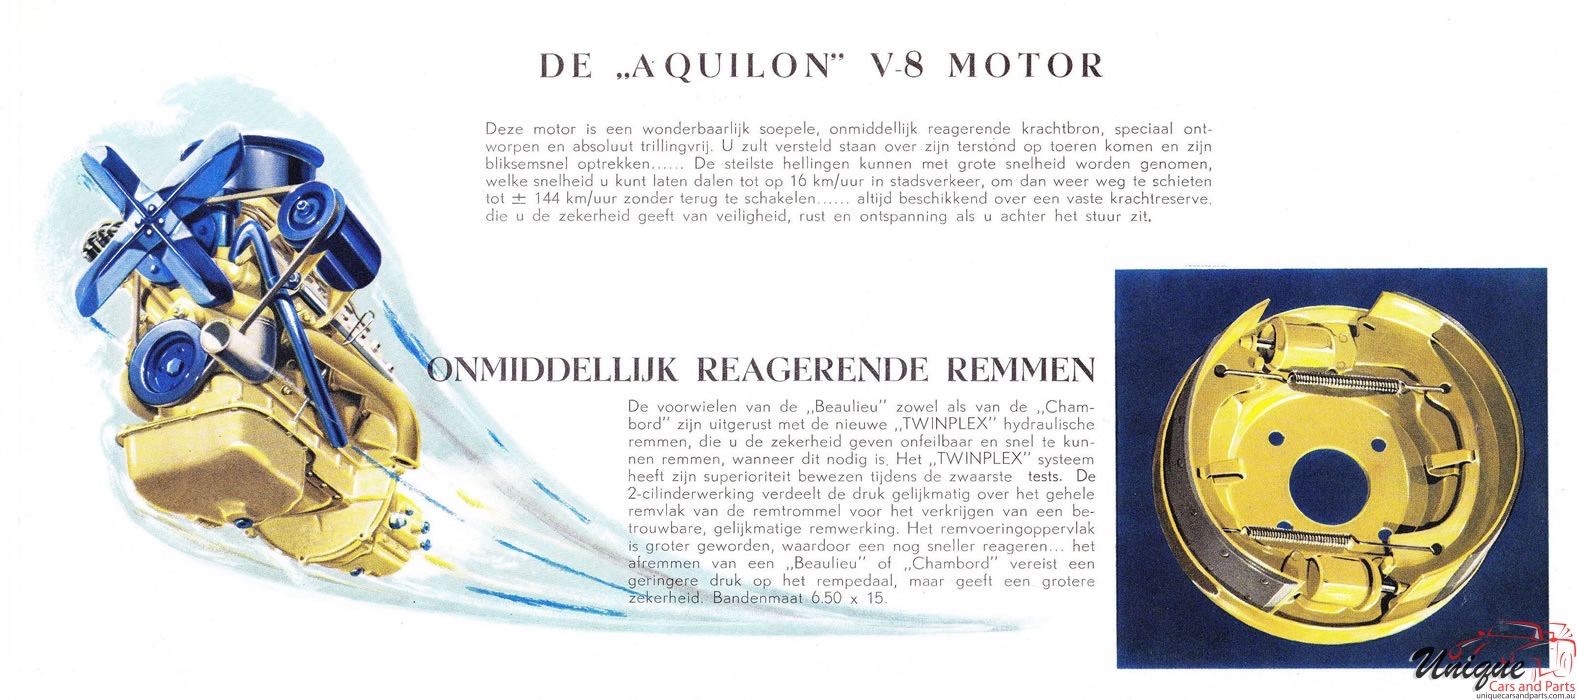 1958 Simca Beaulieu en Chambord (Netherlands) Brochure Page 4